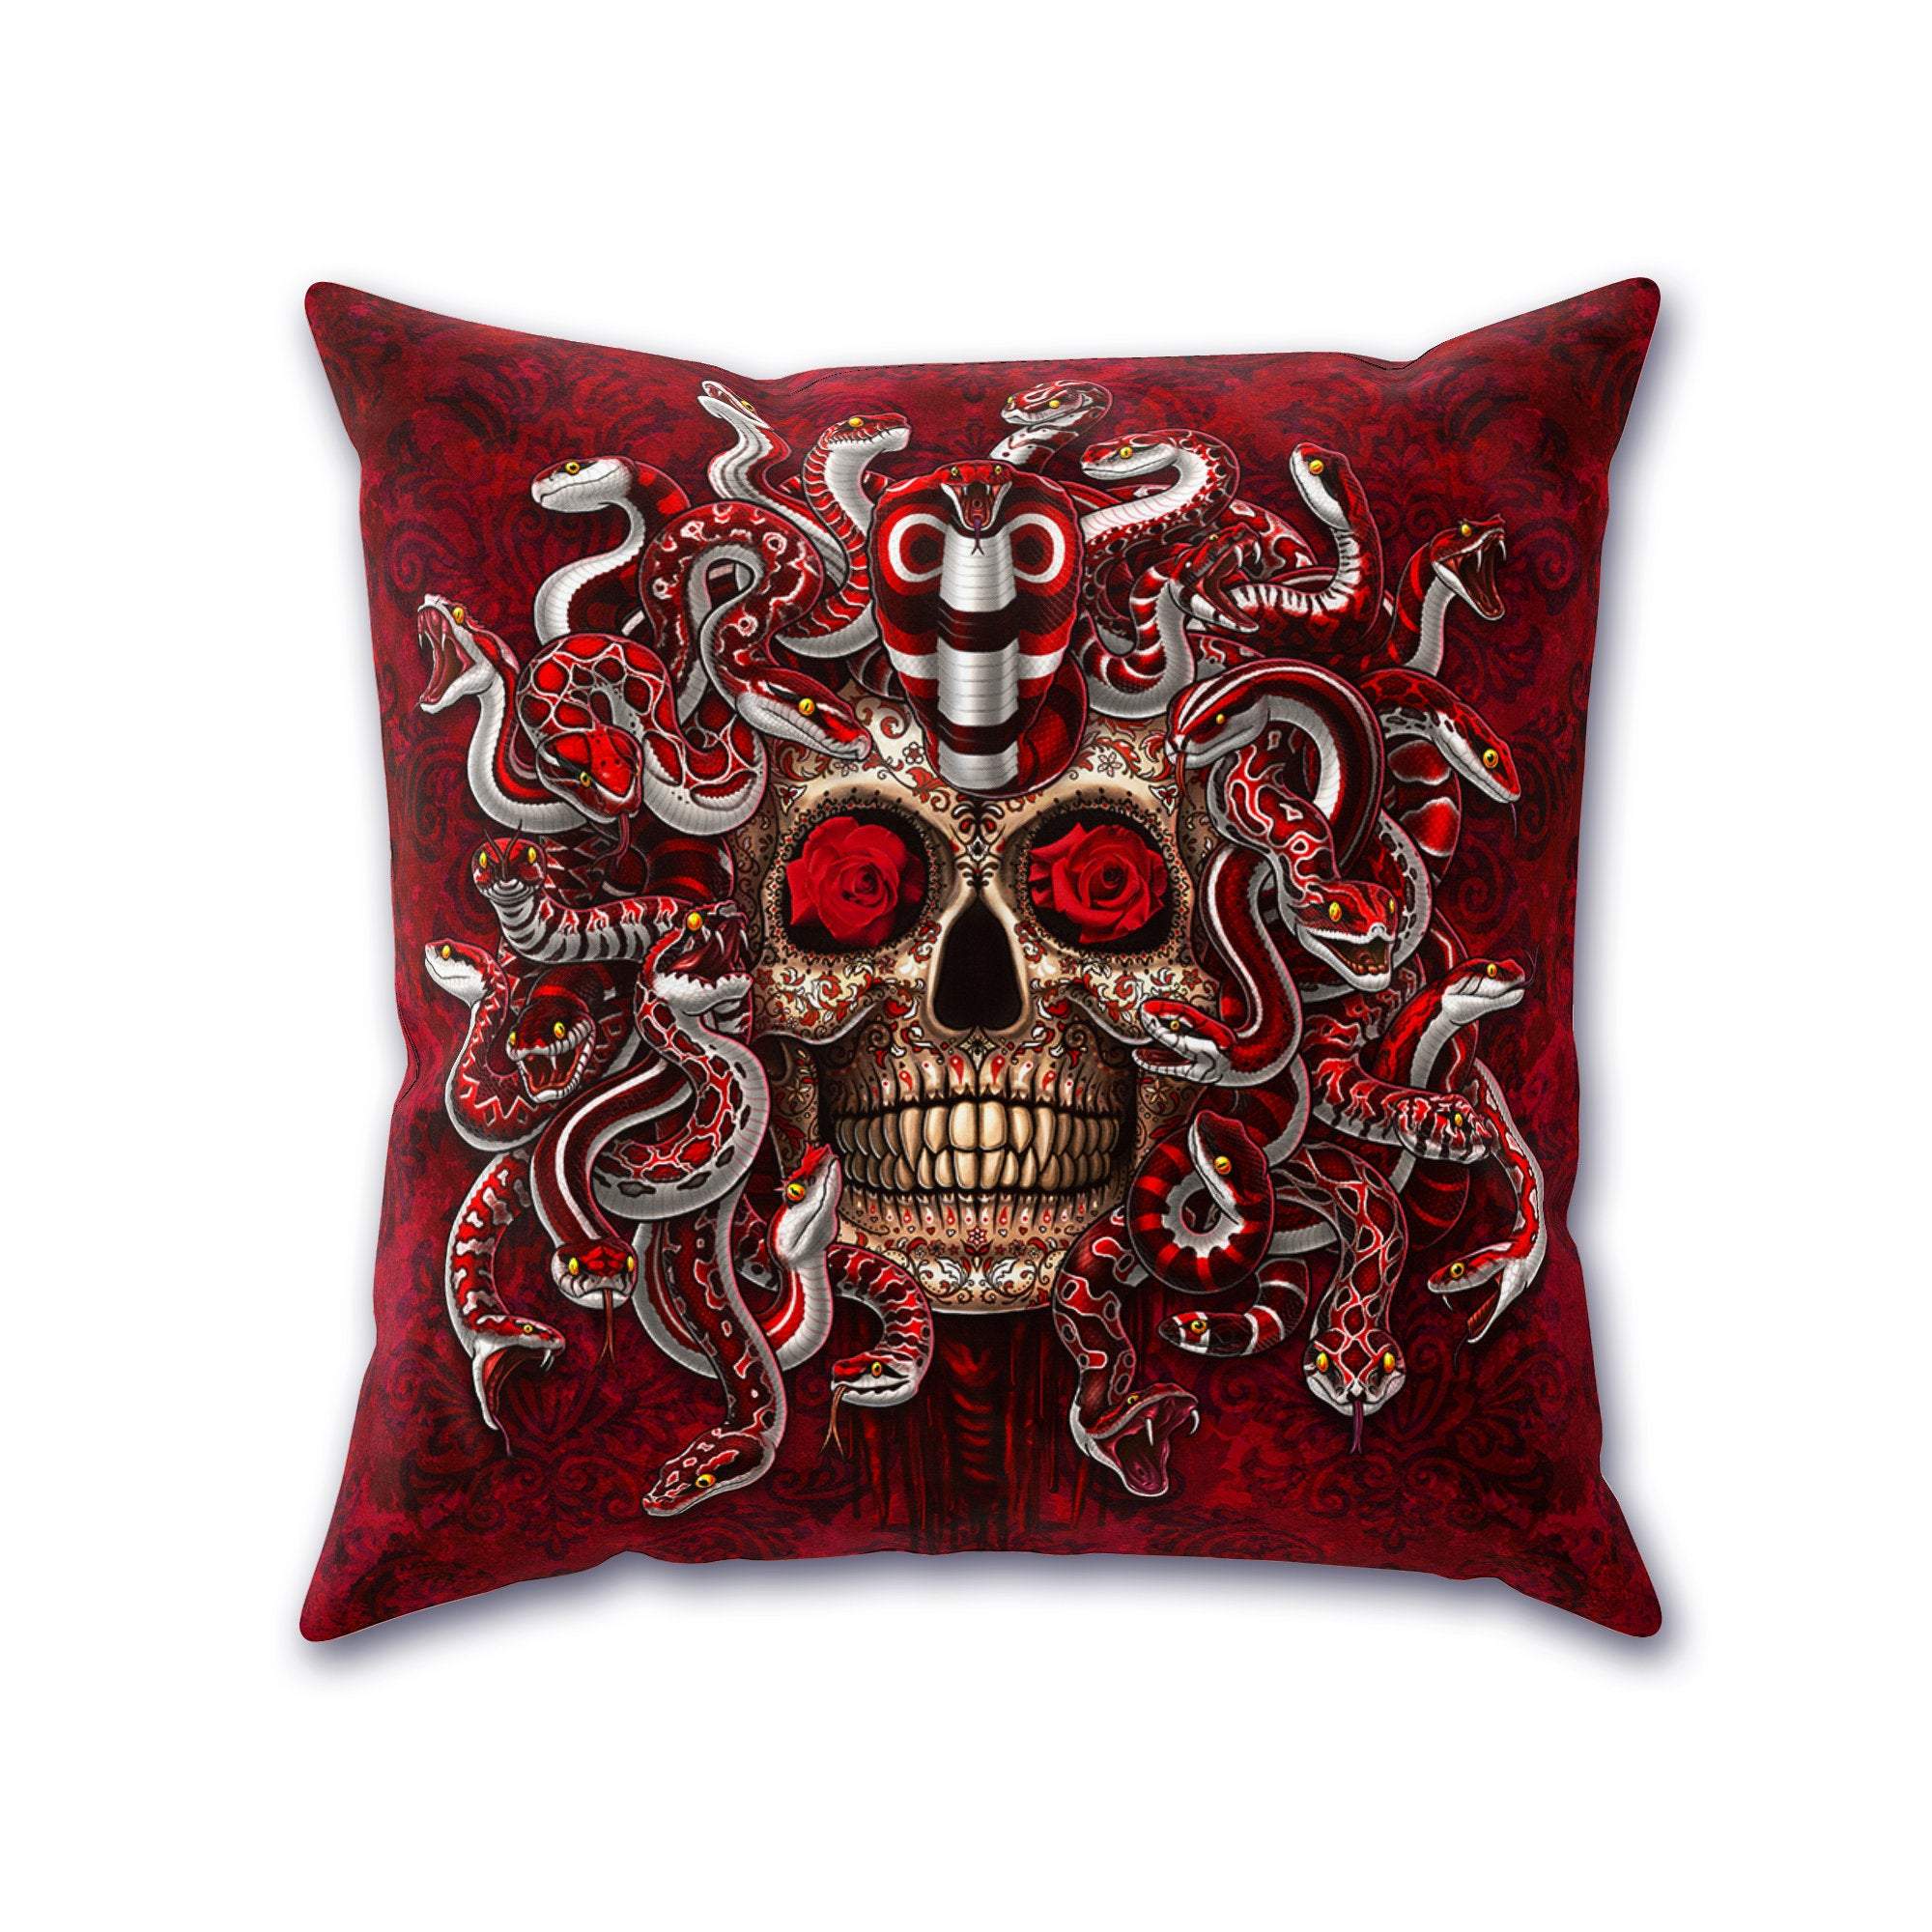 Sugar Skull Throw Pillow, Decorative Accent Cushion, Medusa, Dia de los Muertos Decor, Day of the Dead, Mexican Art, Alternative Home - Red Snakes - Abysm Internal